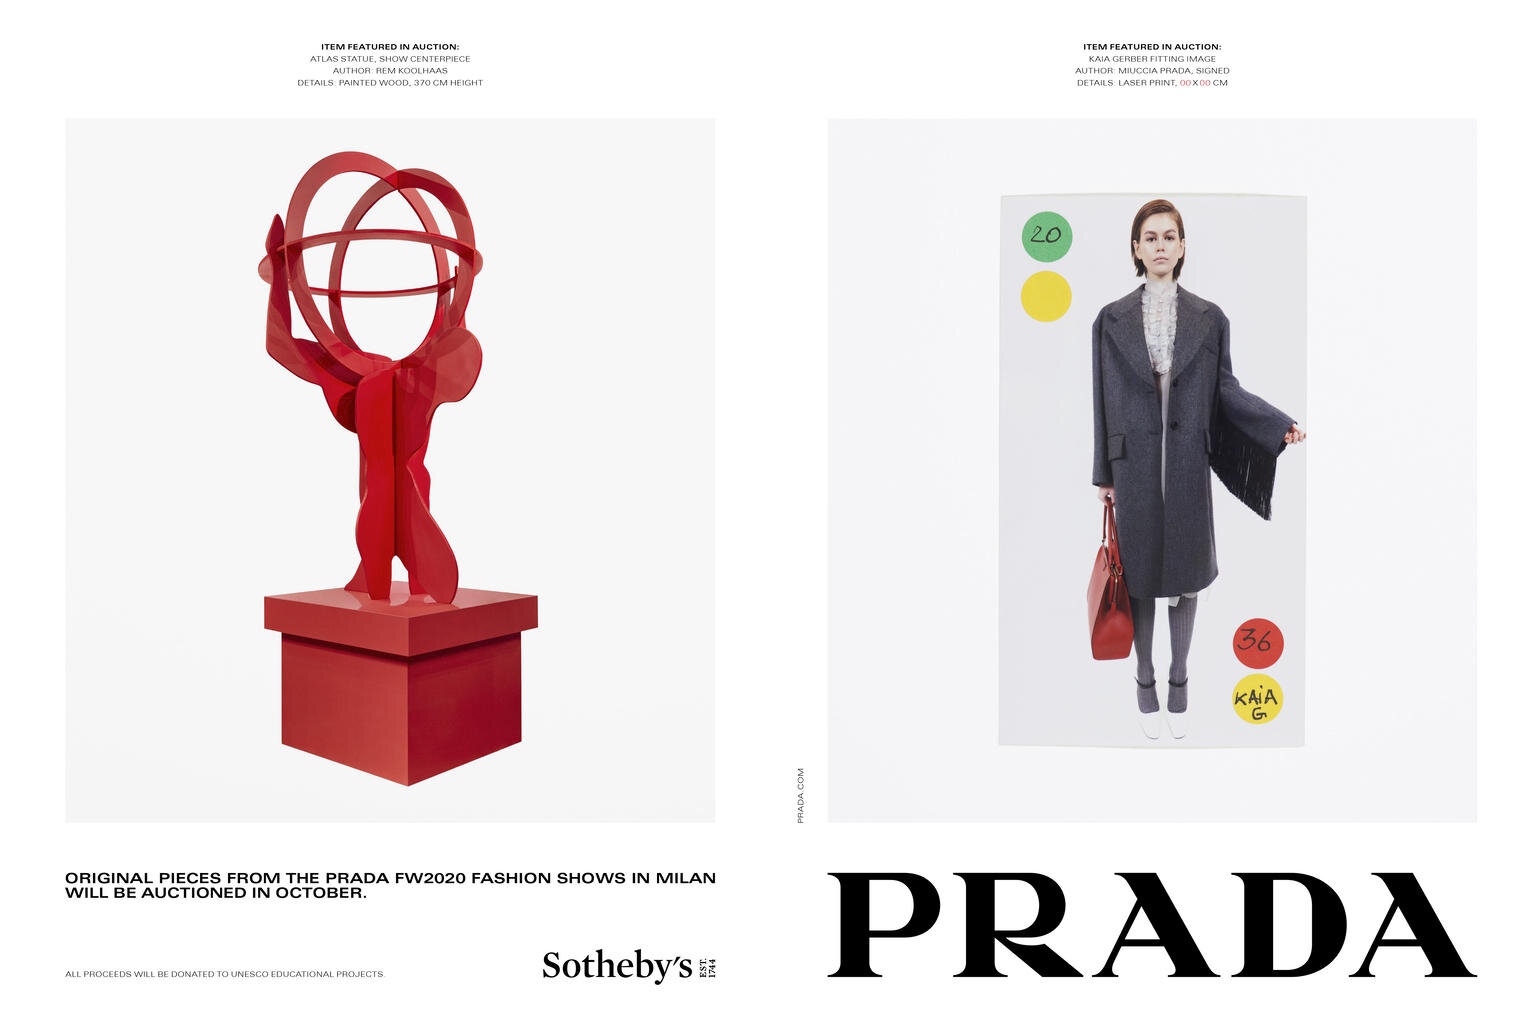 Prada fall/winter 2020 Sotheby’s auction